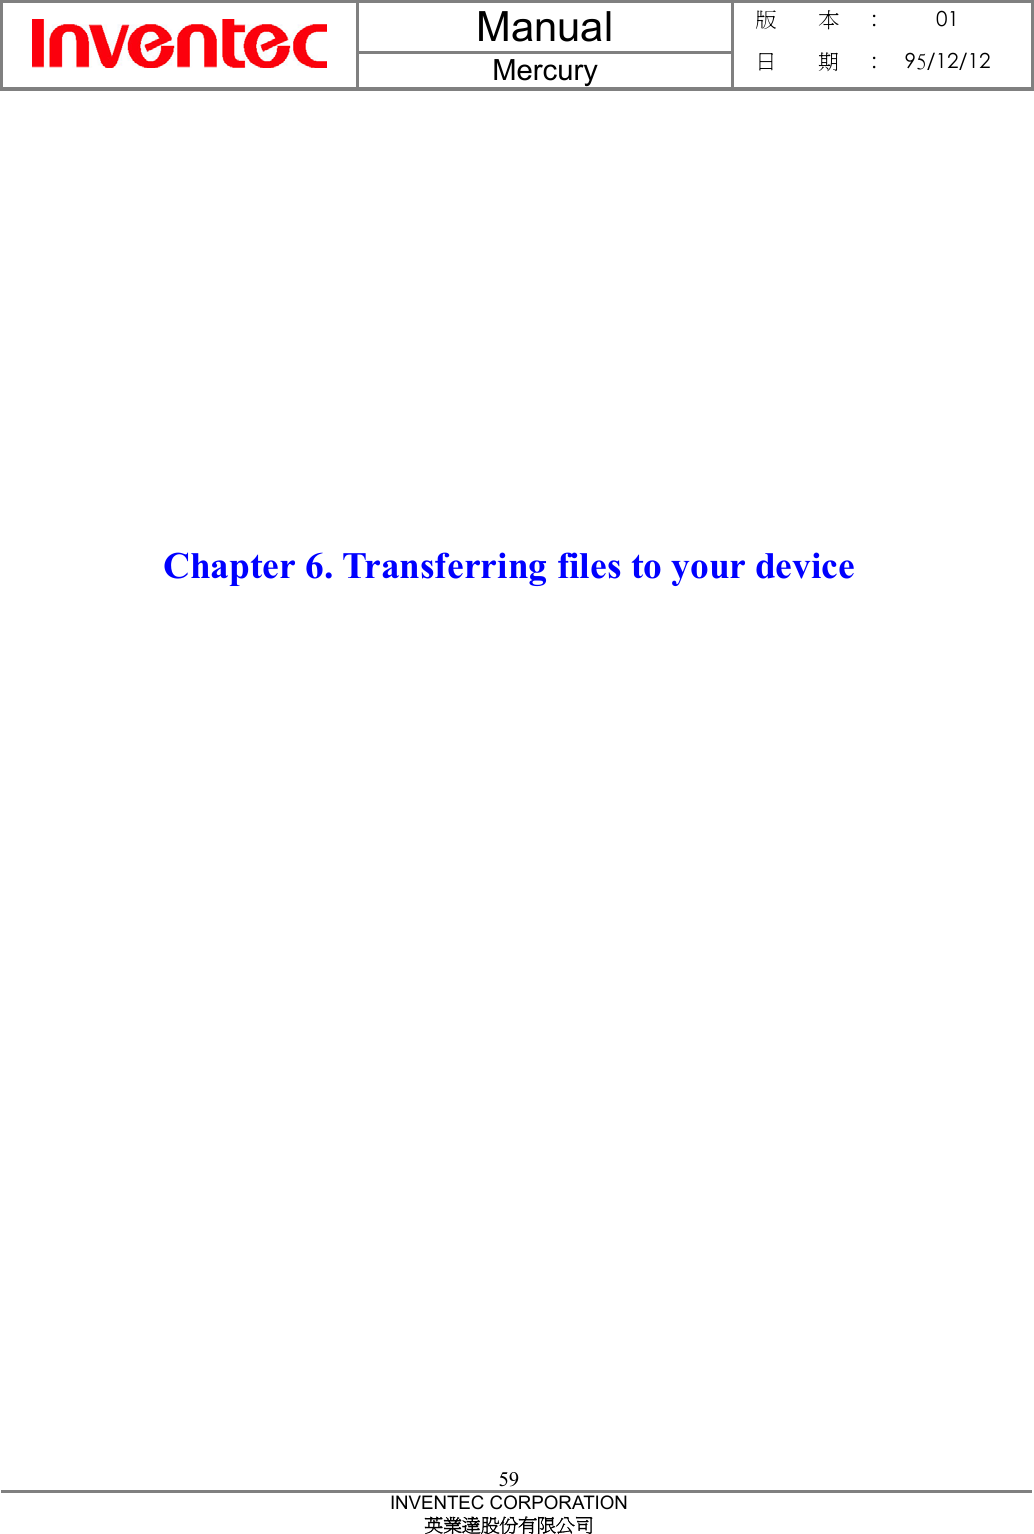 Manual  Mercury 版    本 :  01 日    期 : 95/12/12  59 INVENTEC CORPORATION 英業達股份有限公司             Chapter 6. Transferring files to your device 